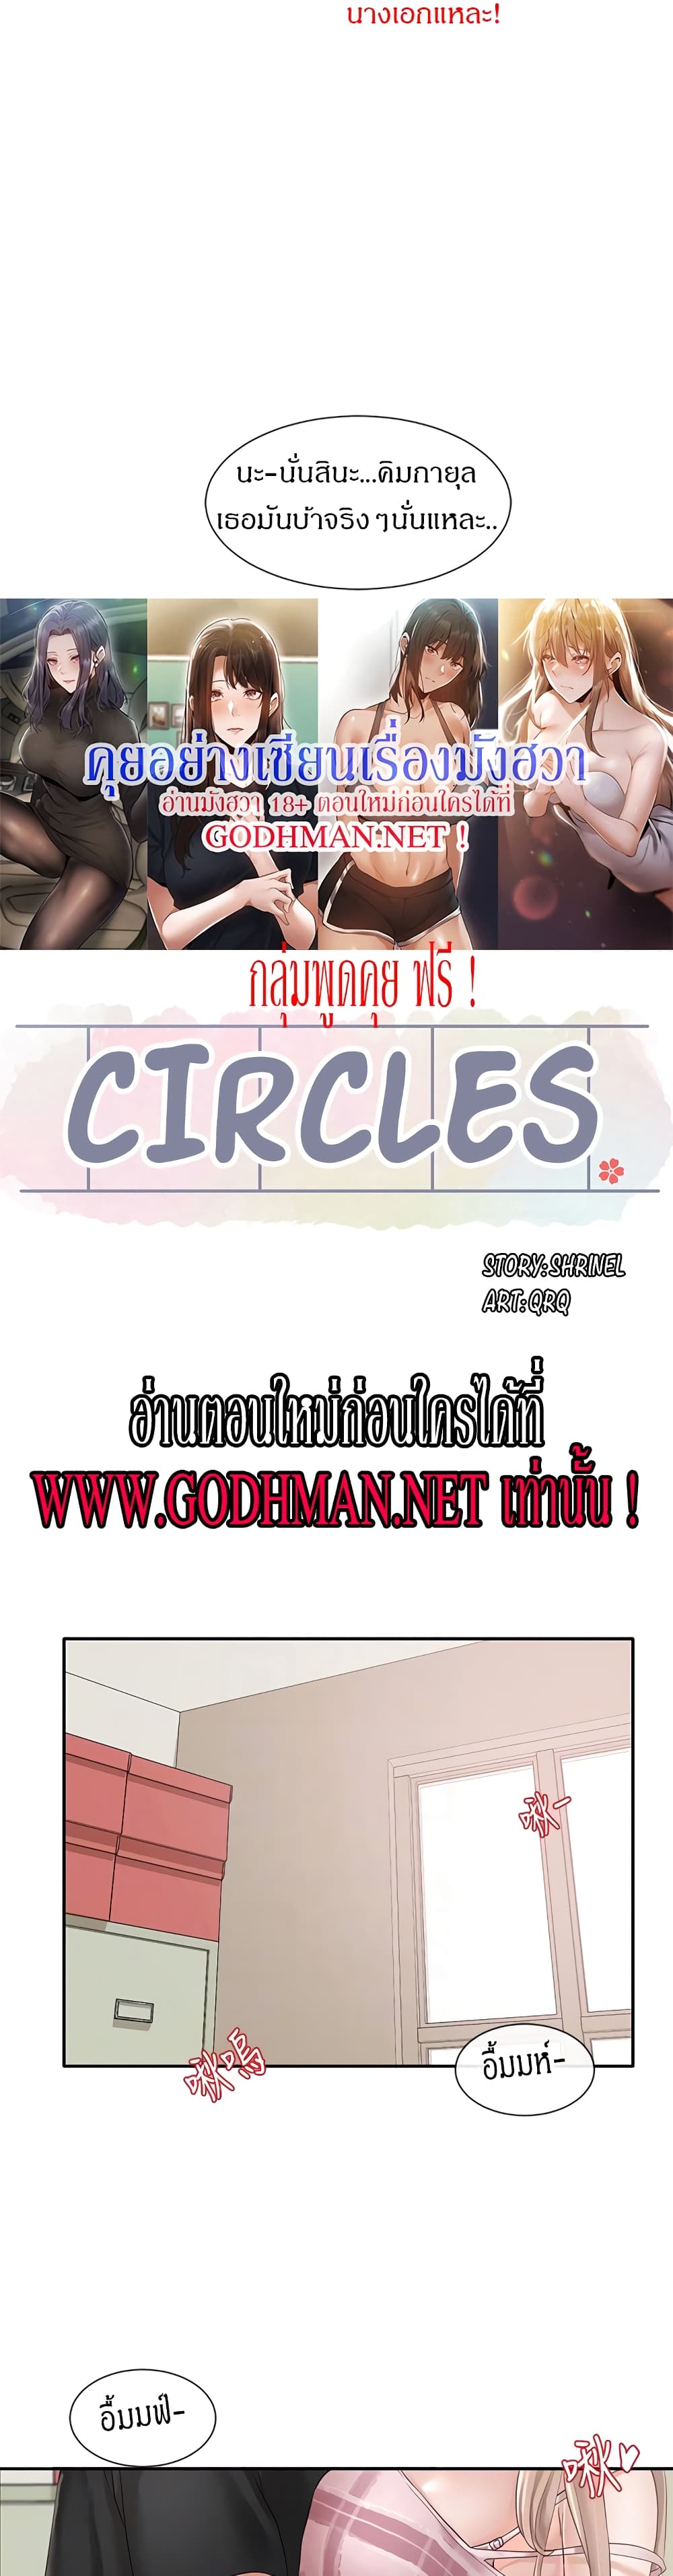 Theater Society (Circles) 54 14